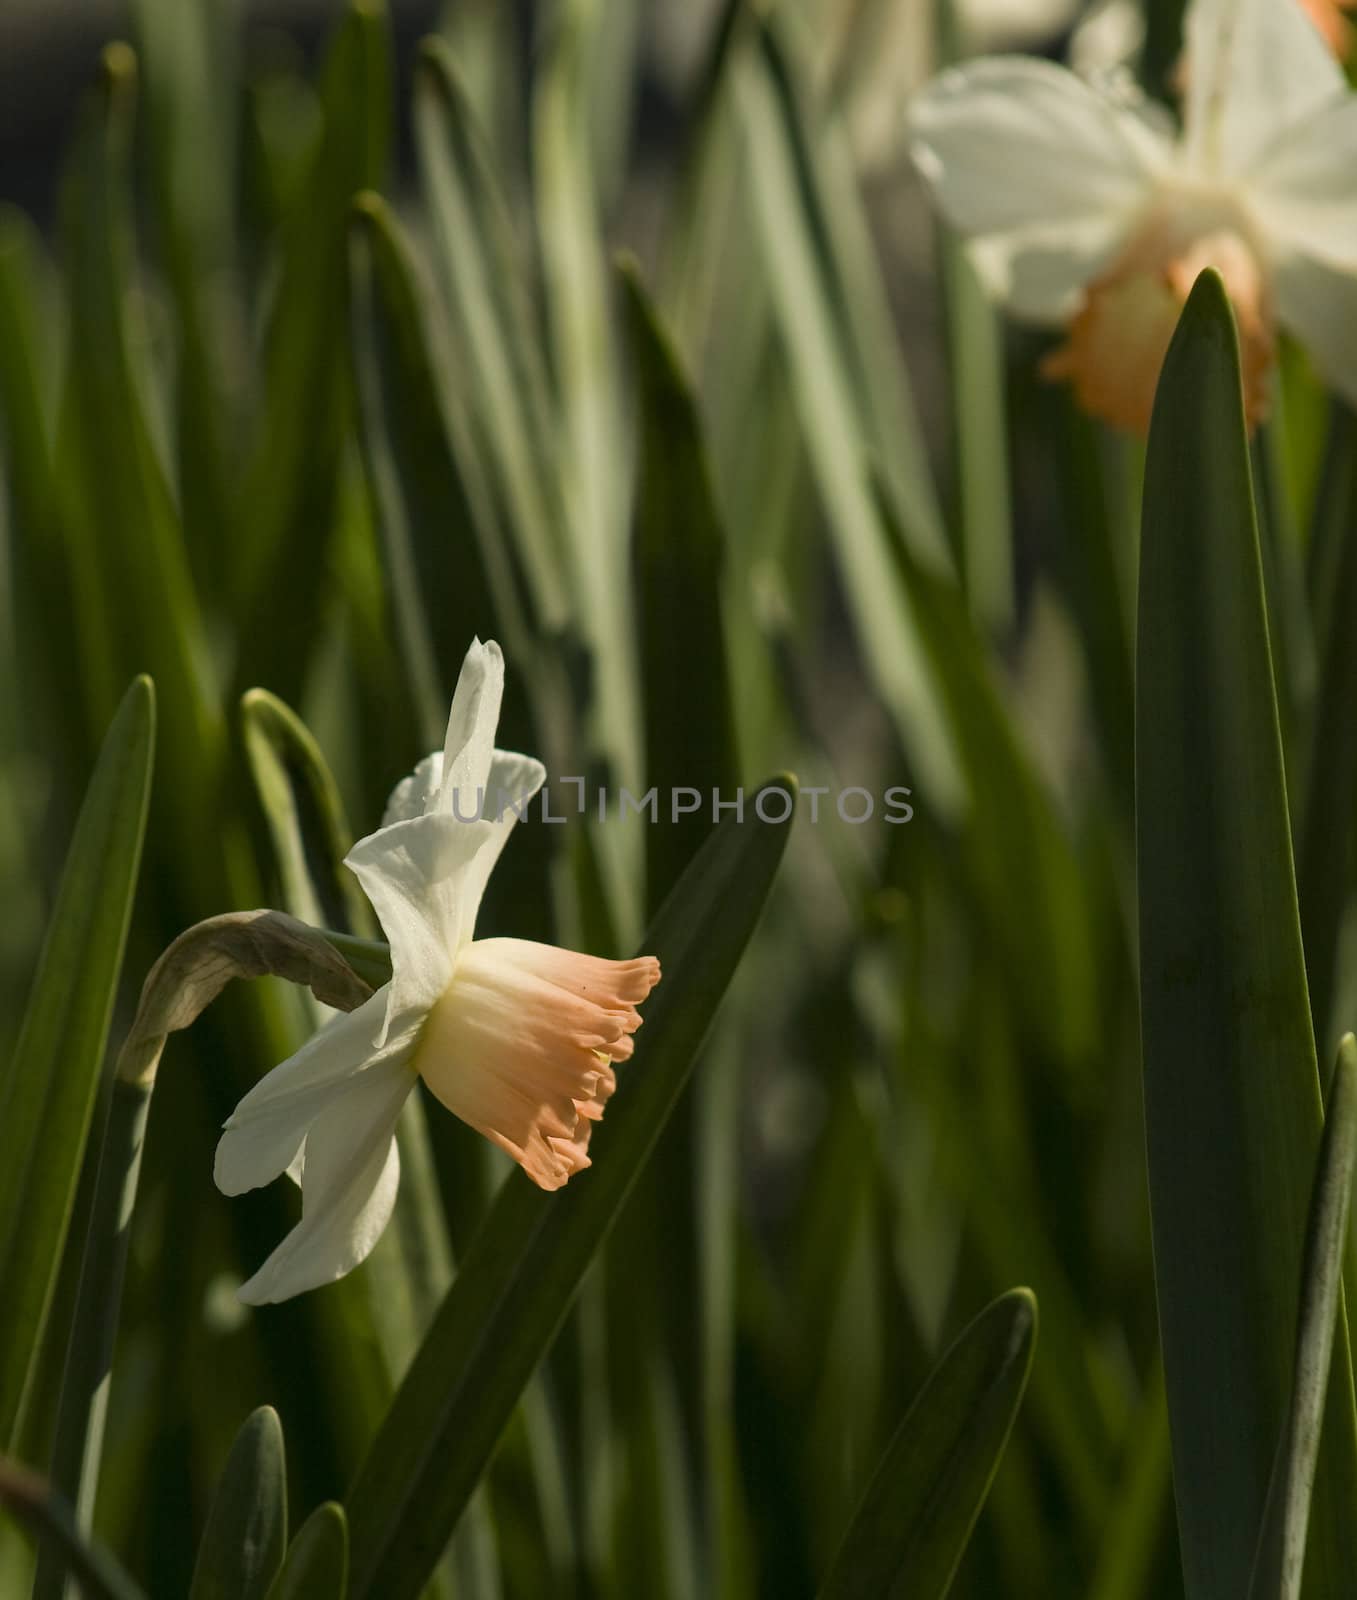 daffodils by LWPhotog